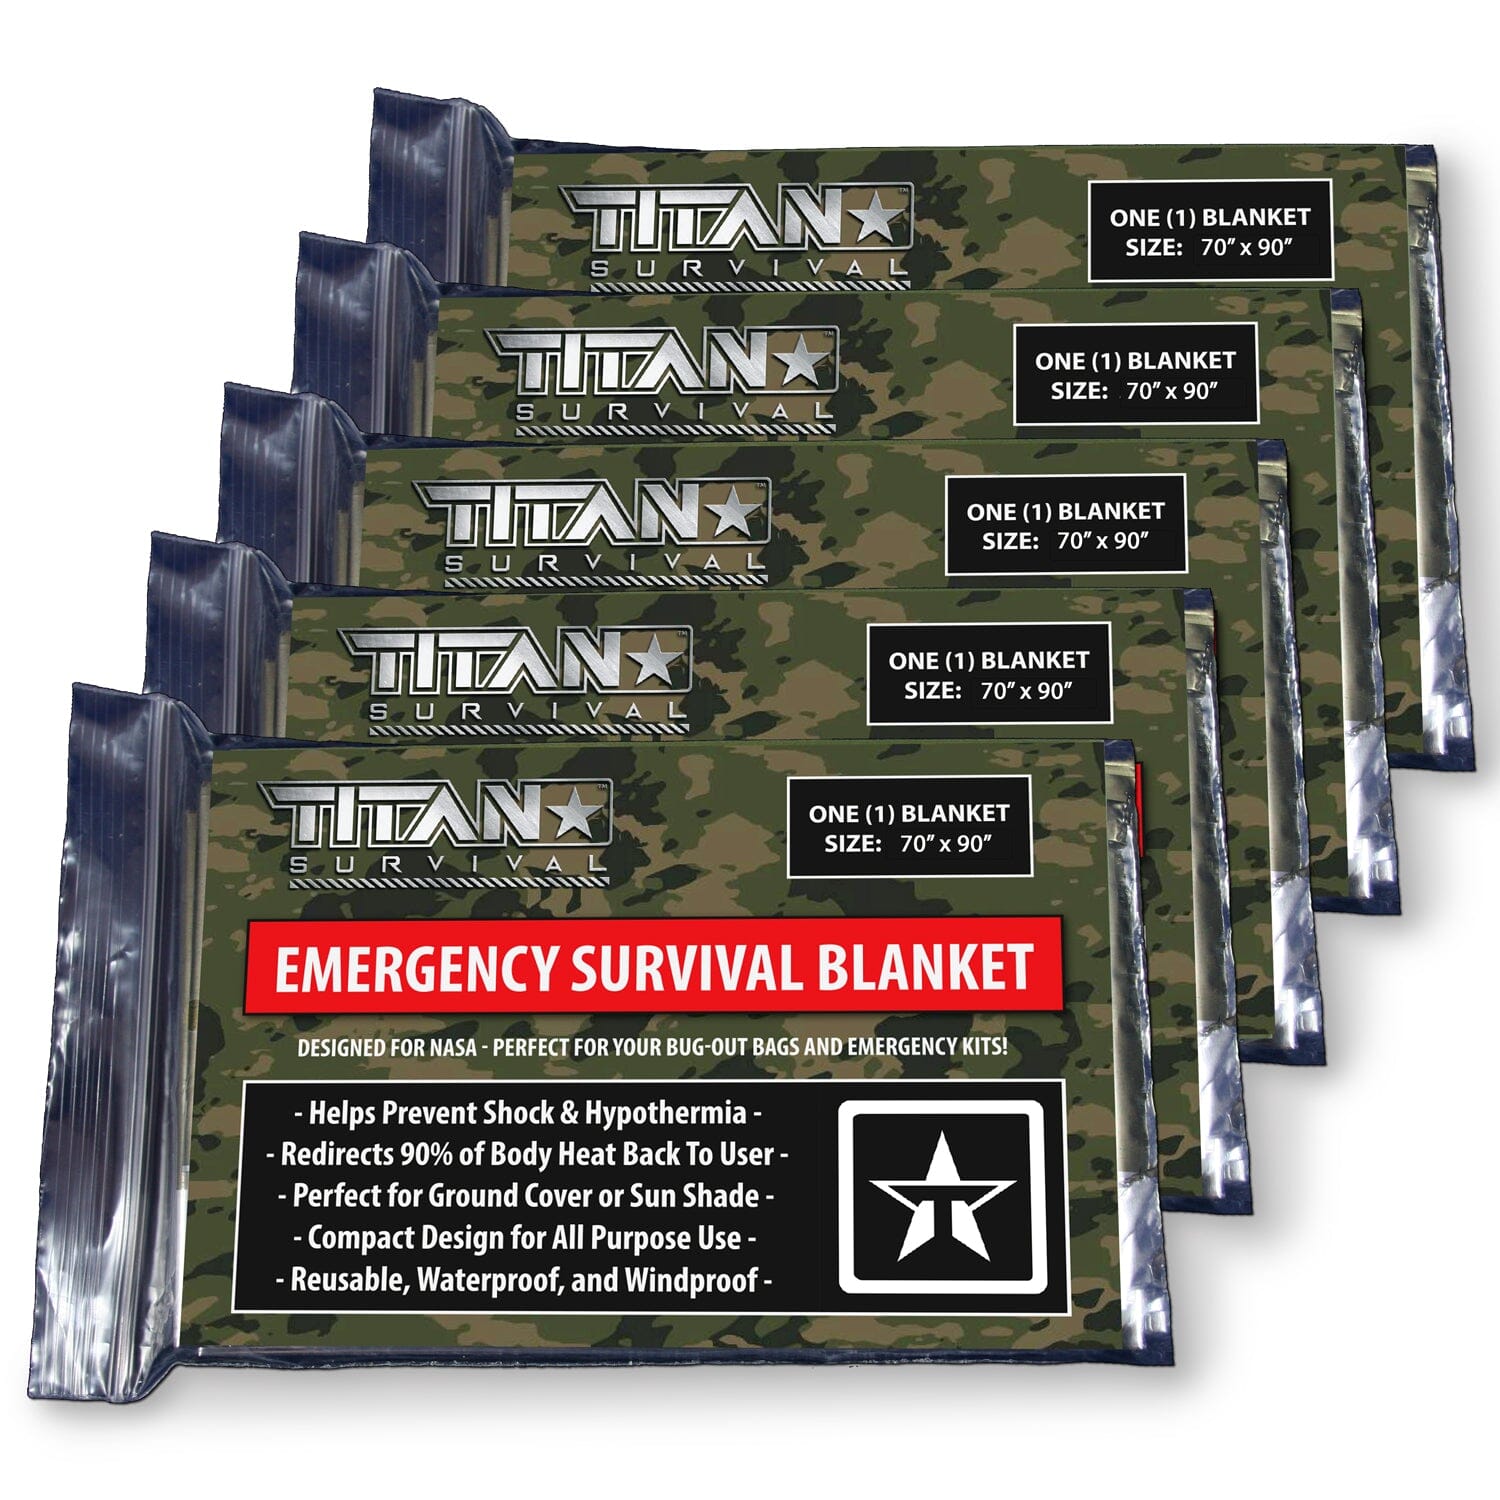 XL Emergency Survival Blankets, 5-Pack, TITAN Survival